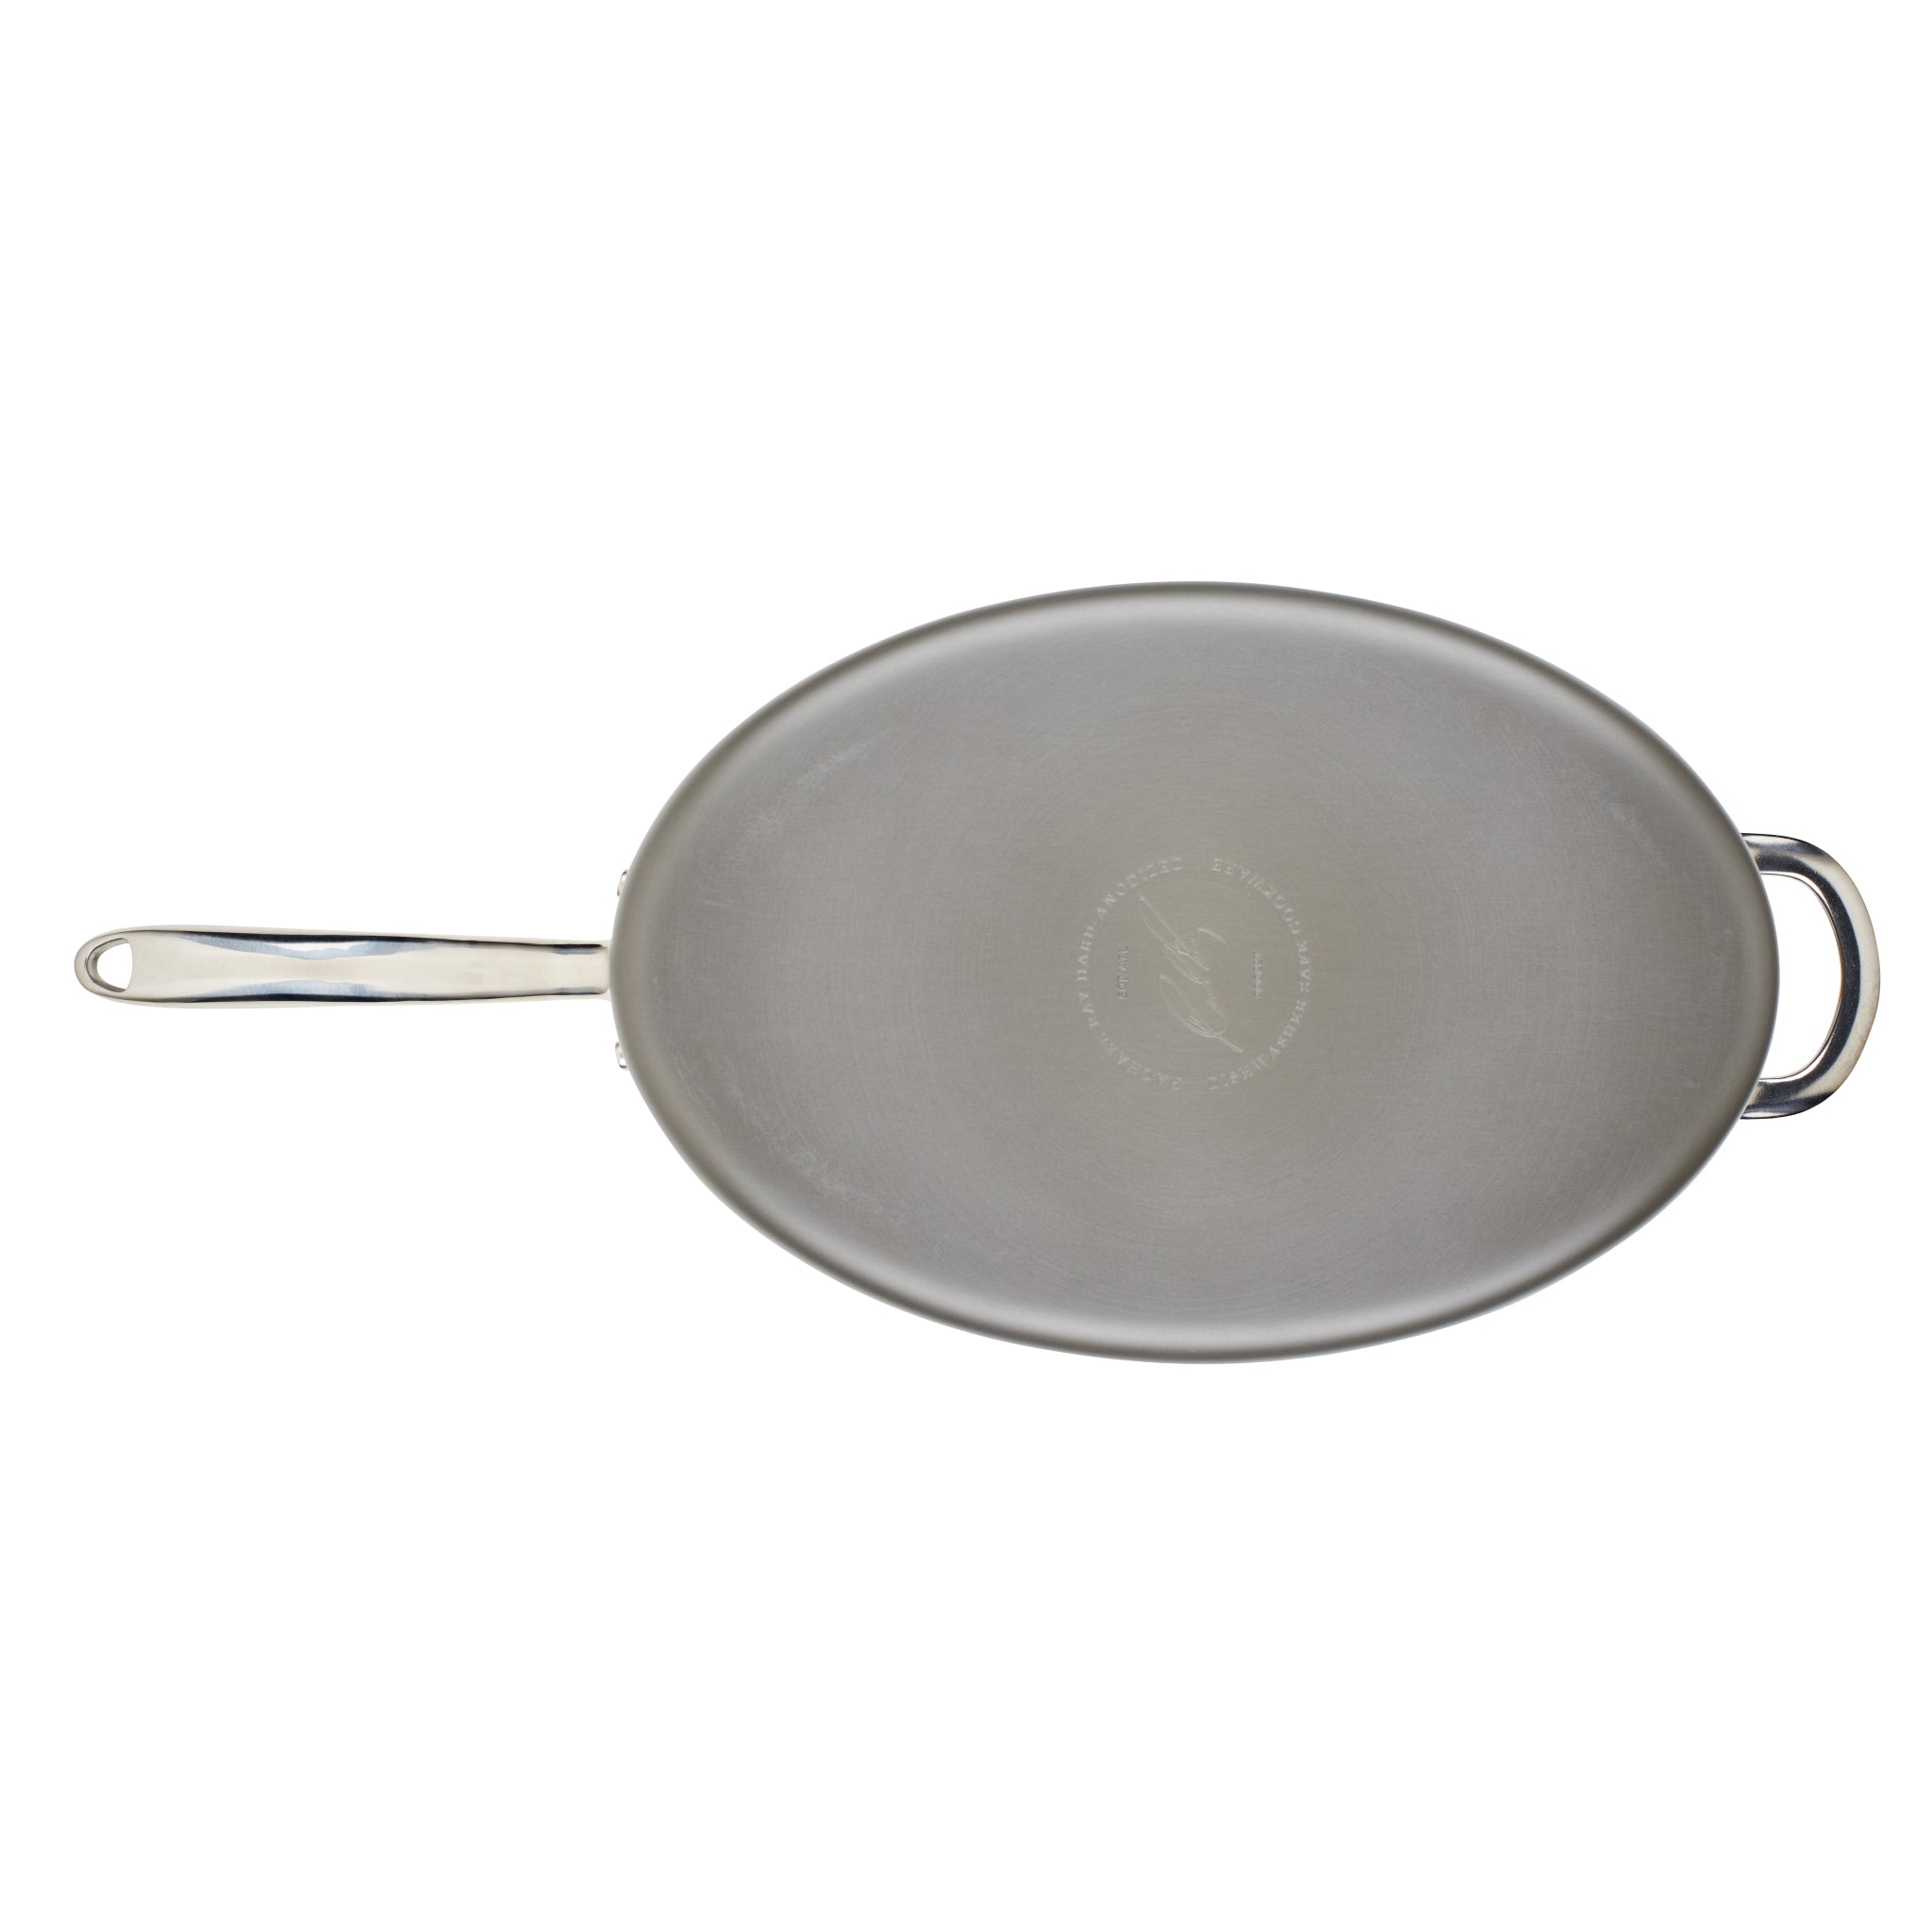 ROYDX Stainless Steel Skillet Saute Pan, 5 Quart Tri-ply Nonstick